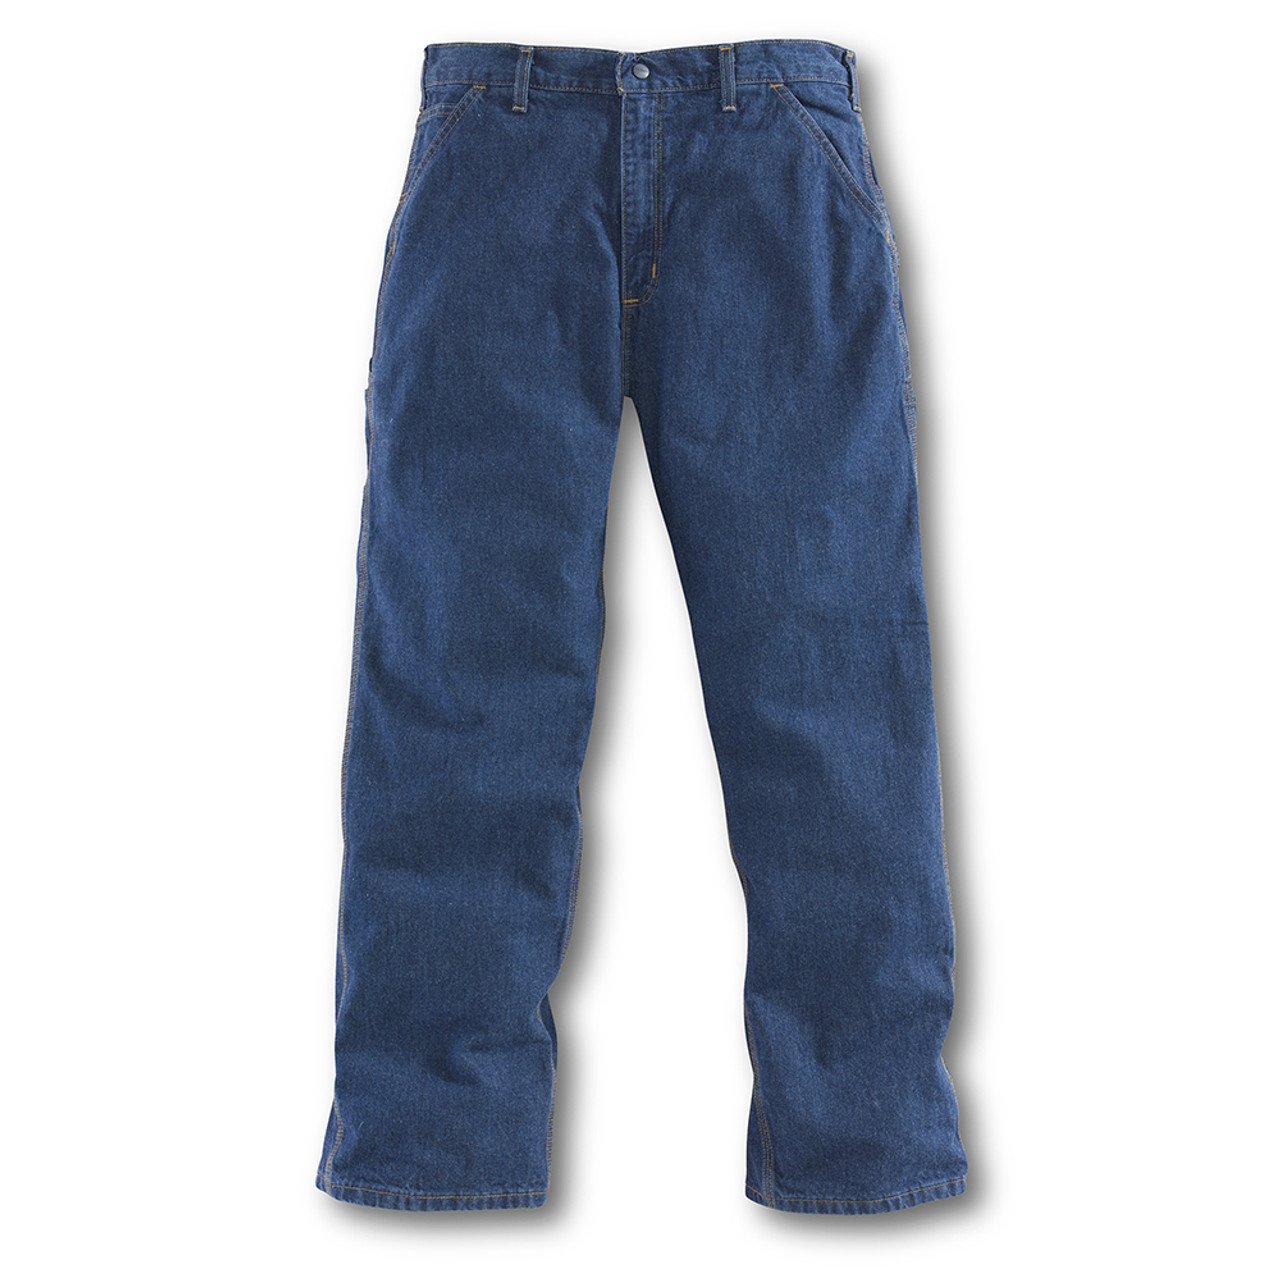 CARHARTT Dungaree Work Pants: Men's, Work Pants, ( 36 in x 30 in ), Blue,  Cotton, Buttons, Zipper